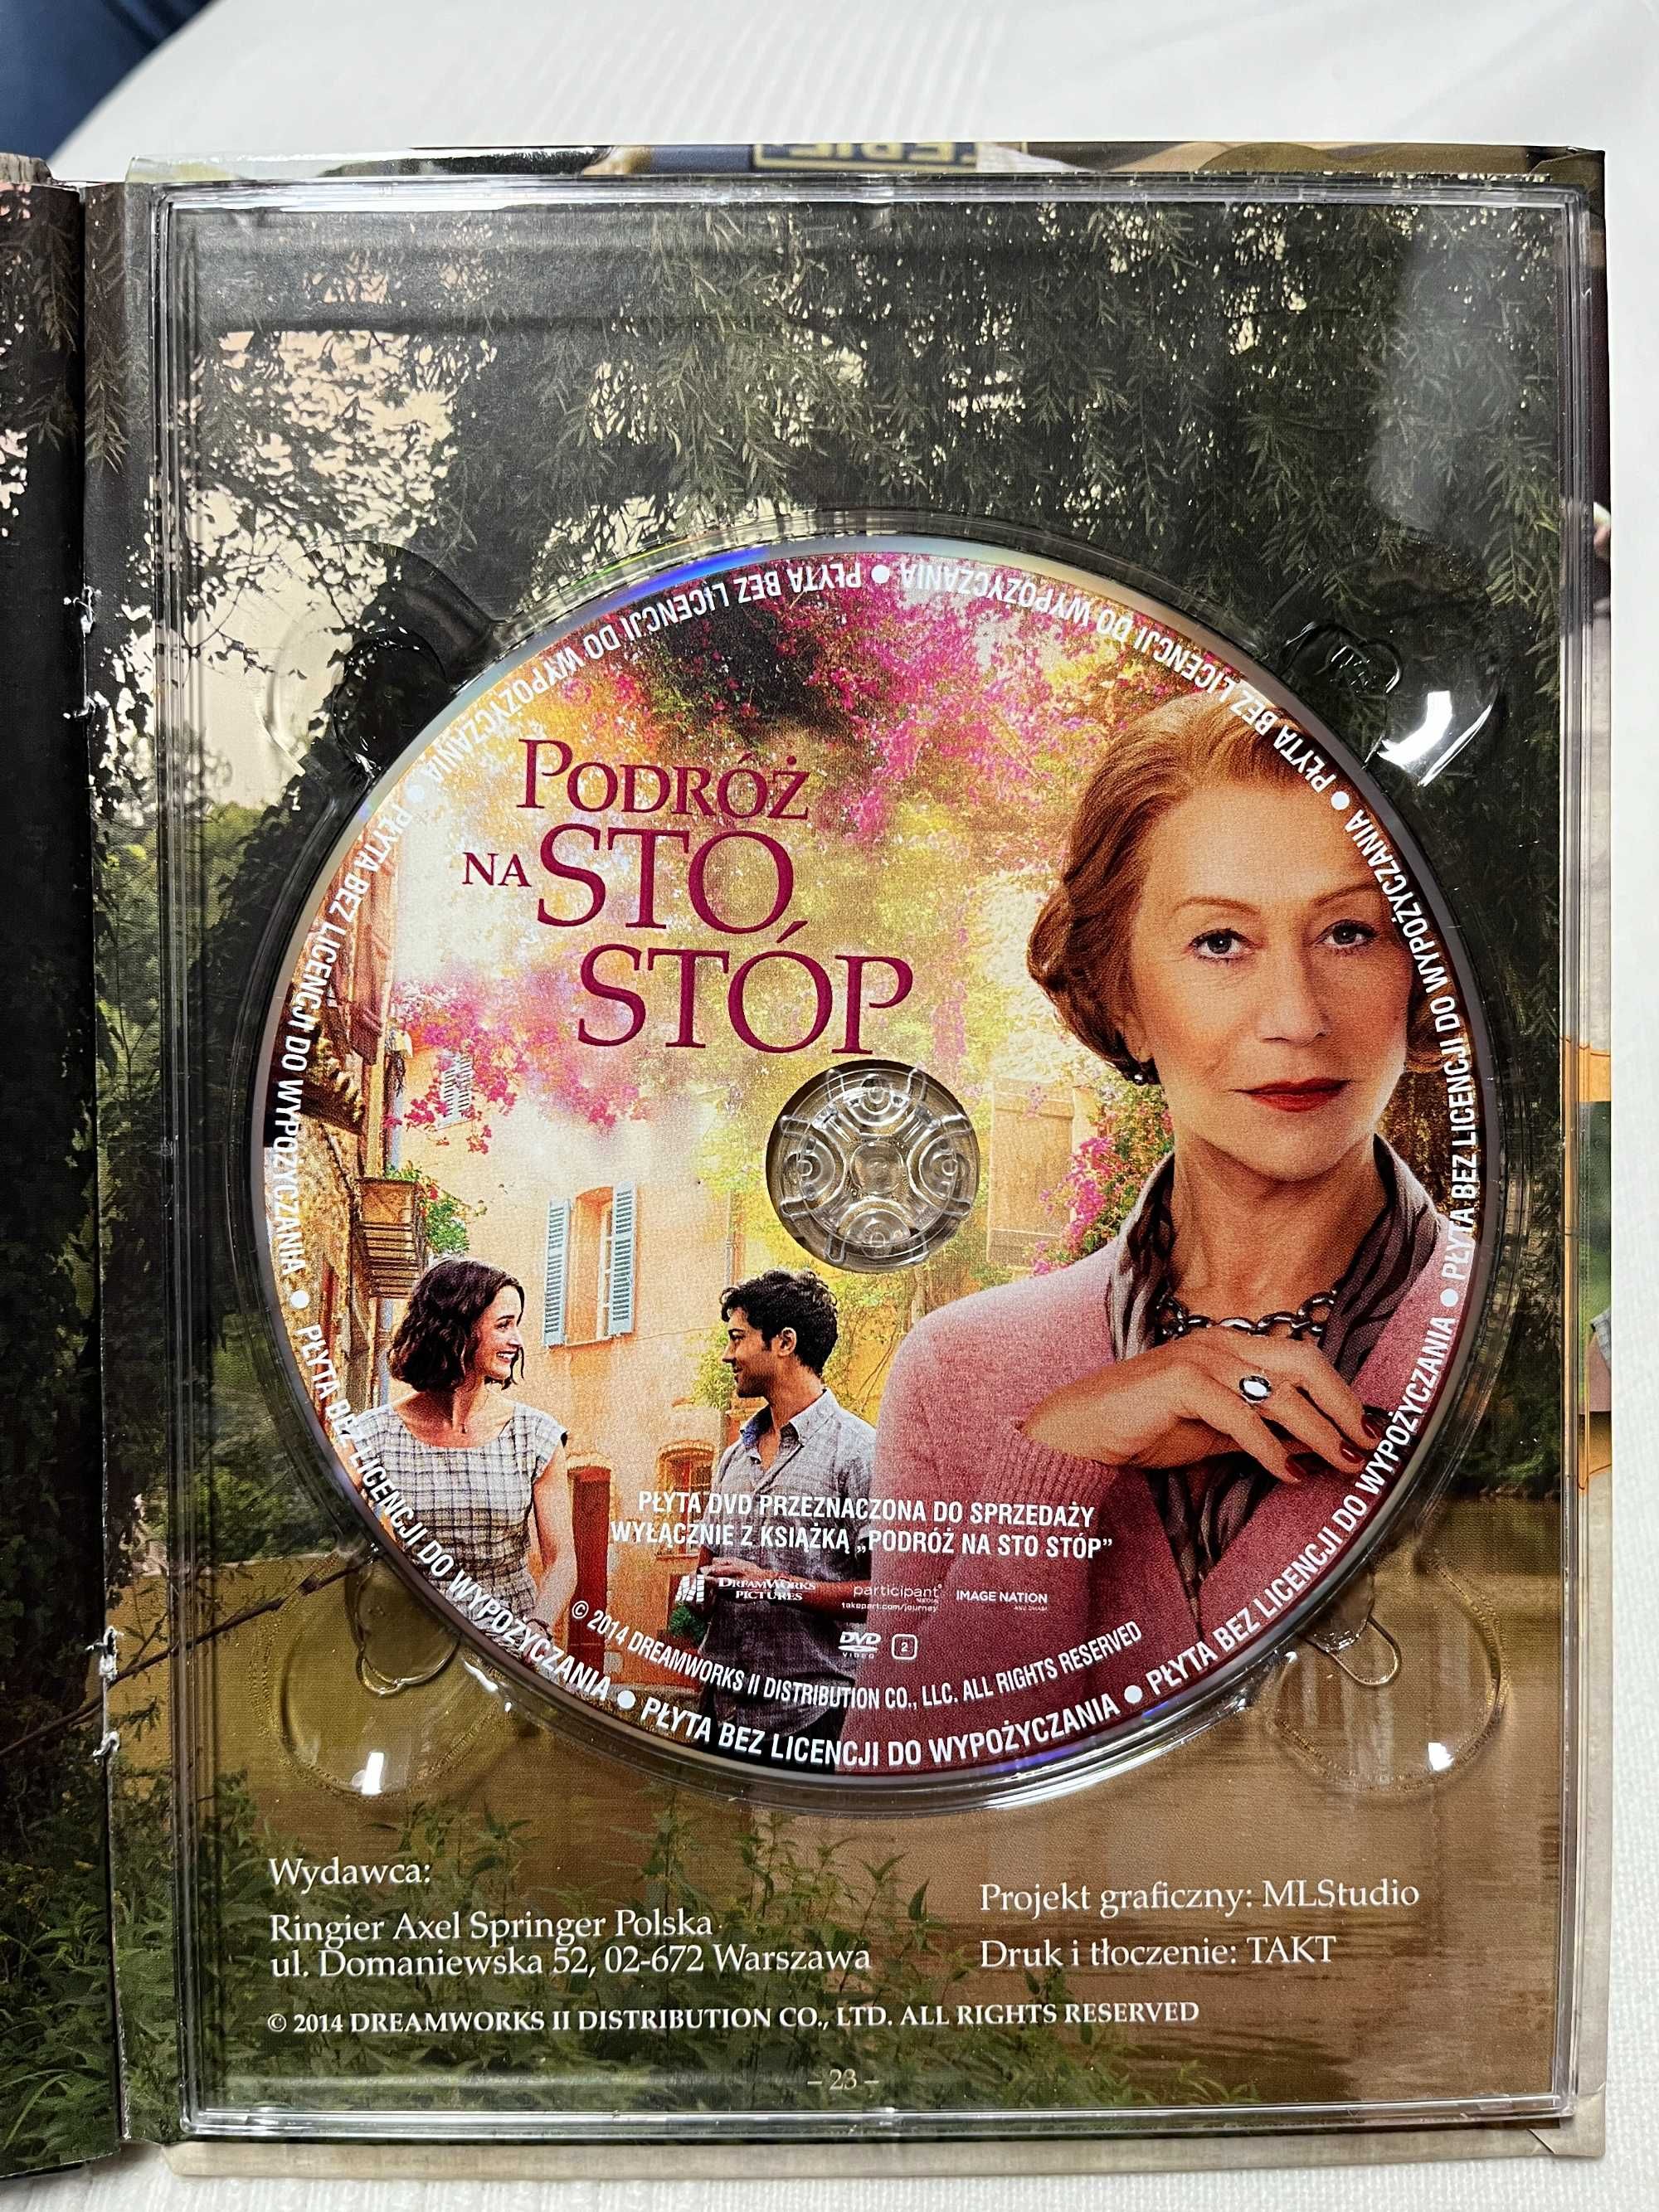 Podróż na sto stóp film płyta DVD dramat komedia Helen Mirren kino